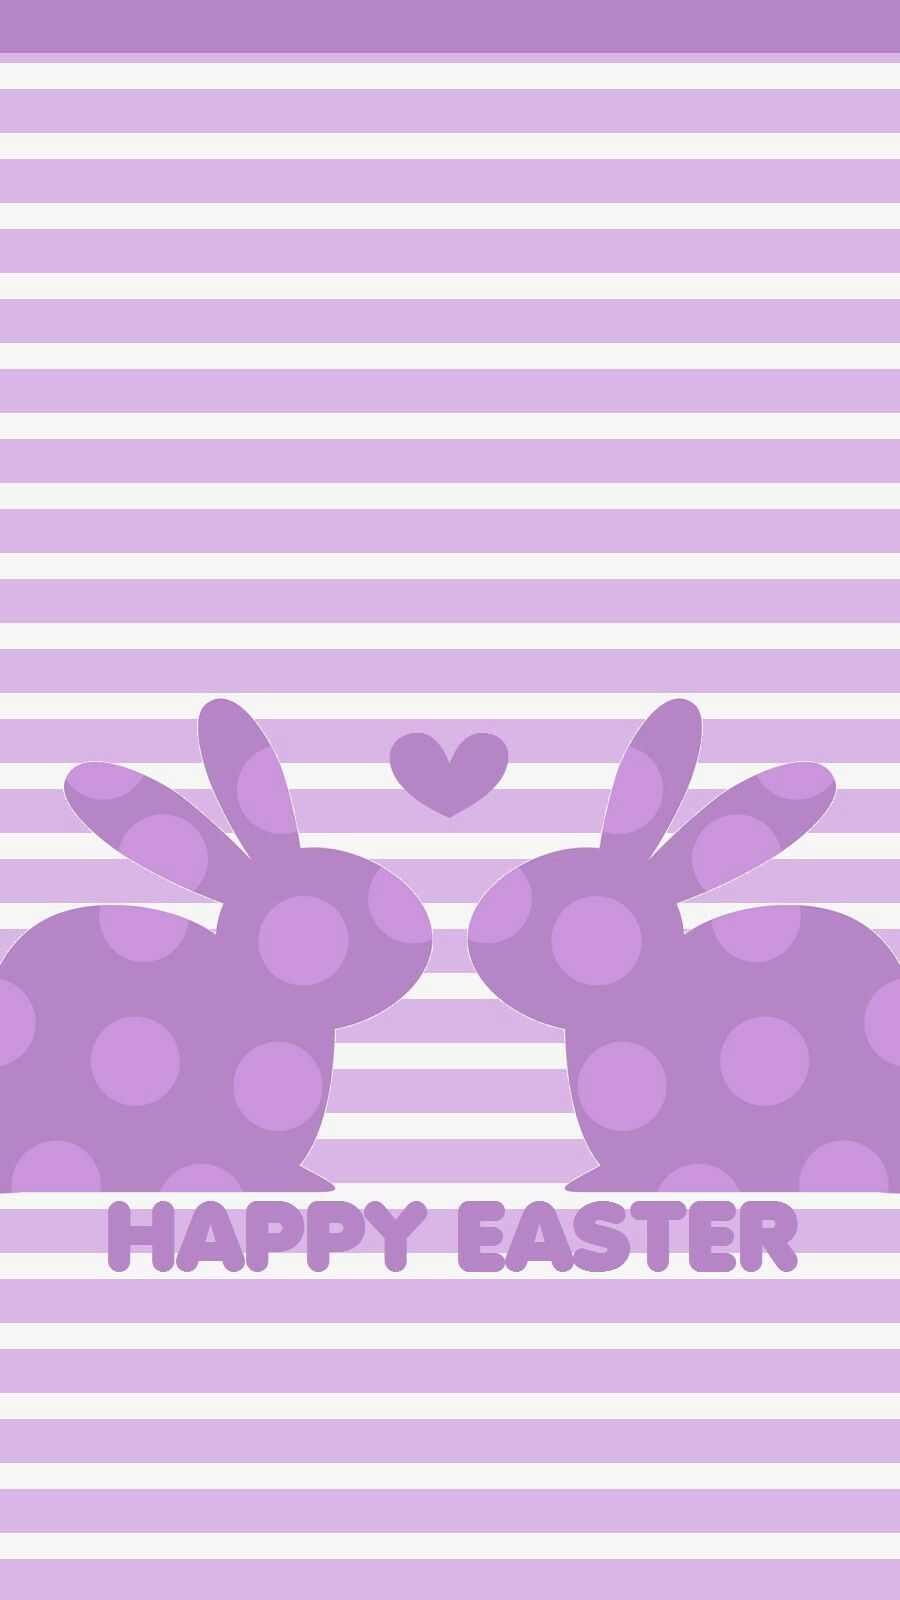 ЄคᎦ৳ҽr. Happy easter wallpaper, Easter wallpaper, Easter background